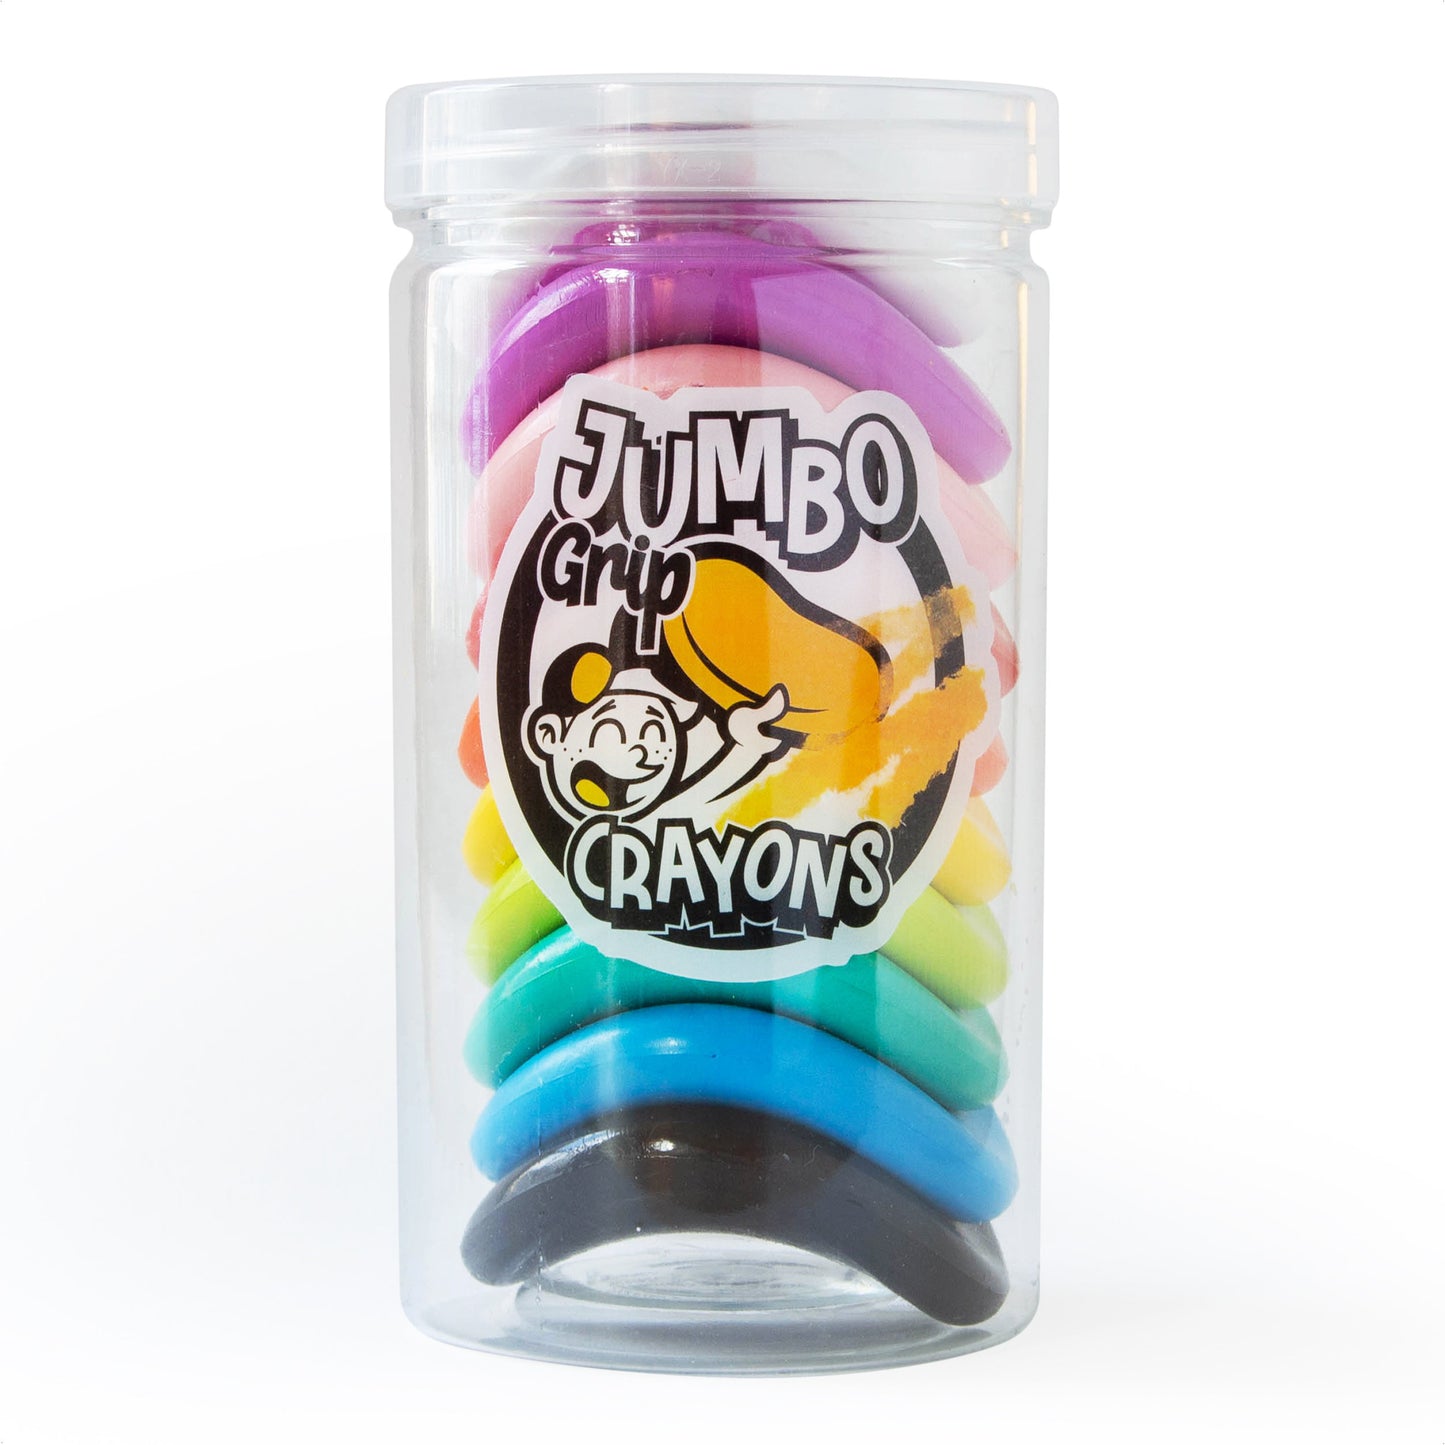 Jumbo Grip Crayons